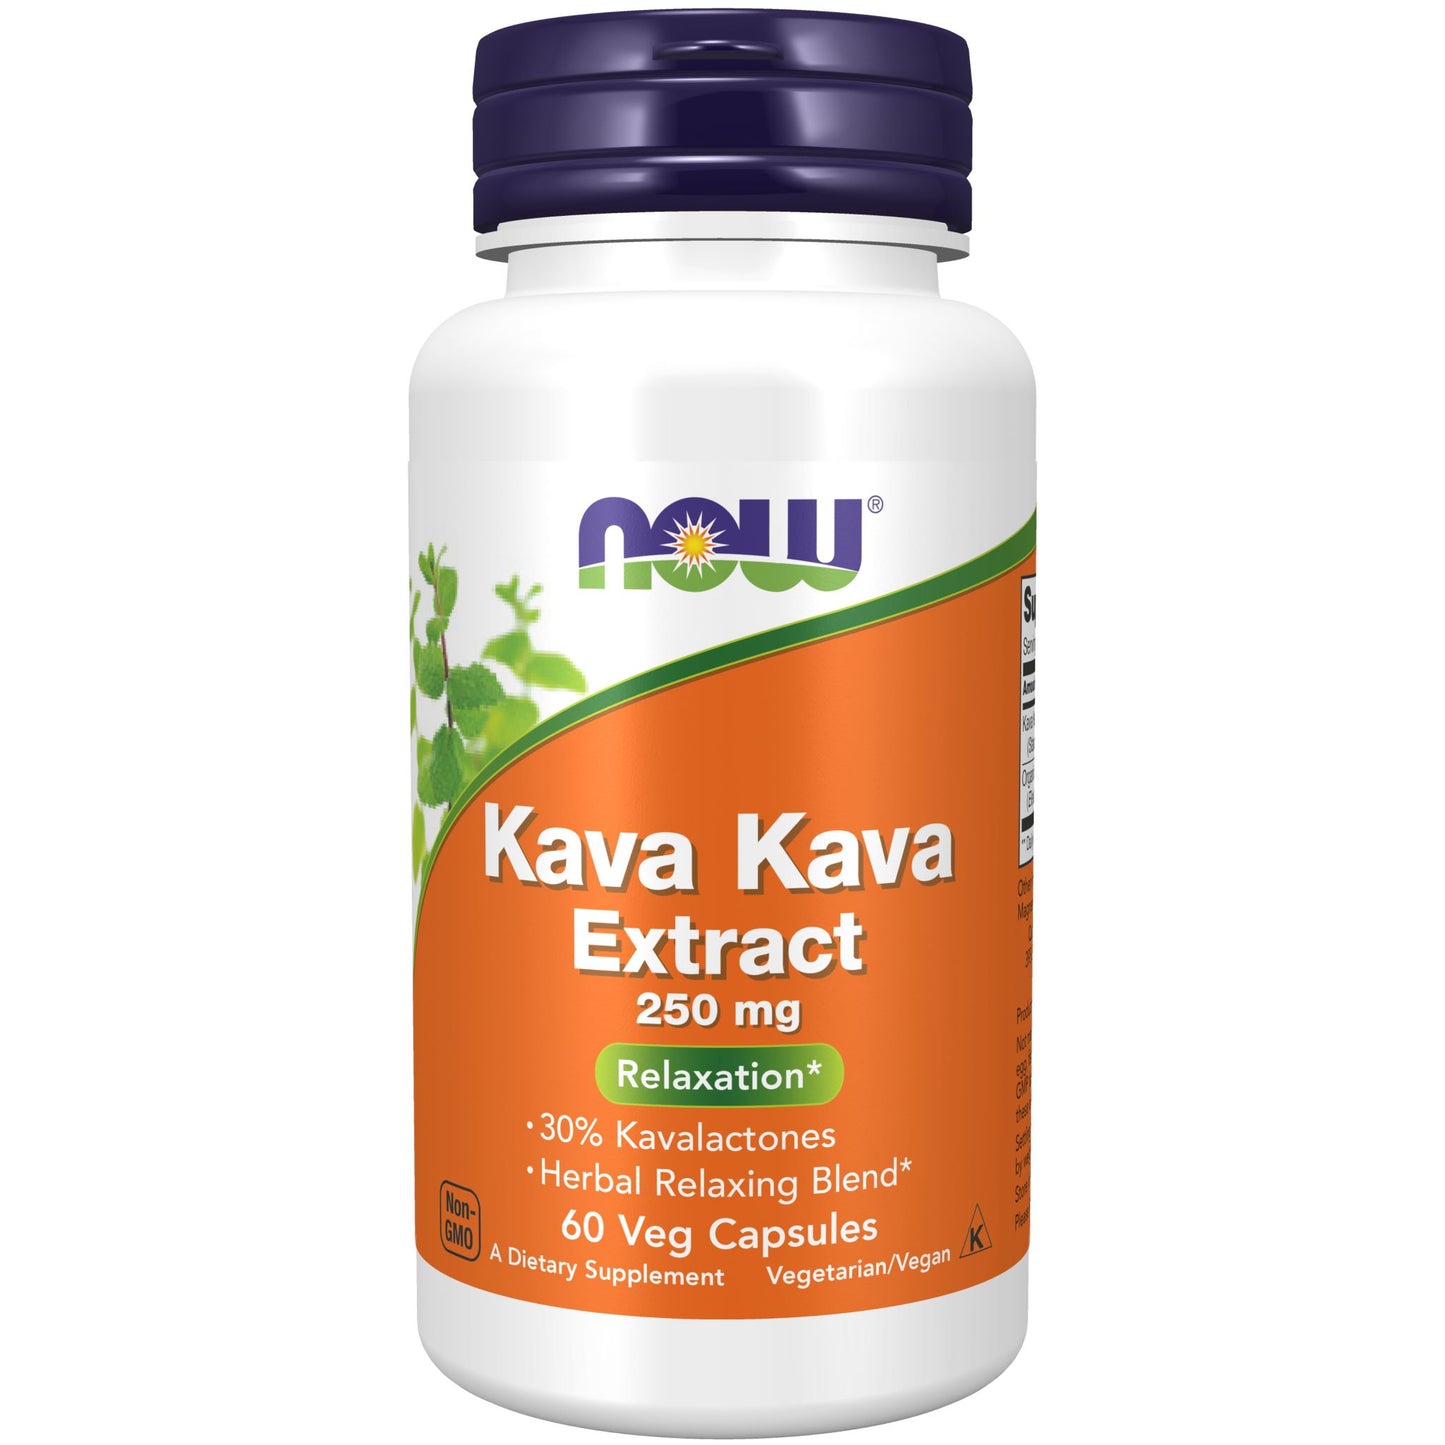 NOW Foods Kava Kava Extract